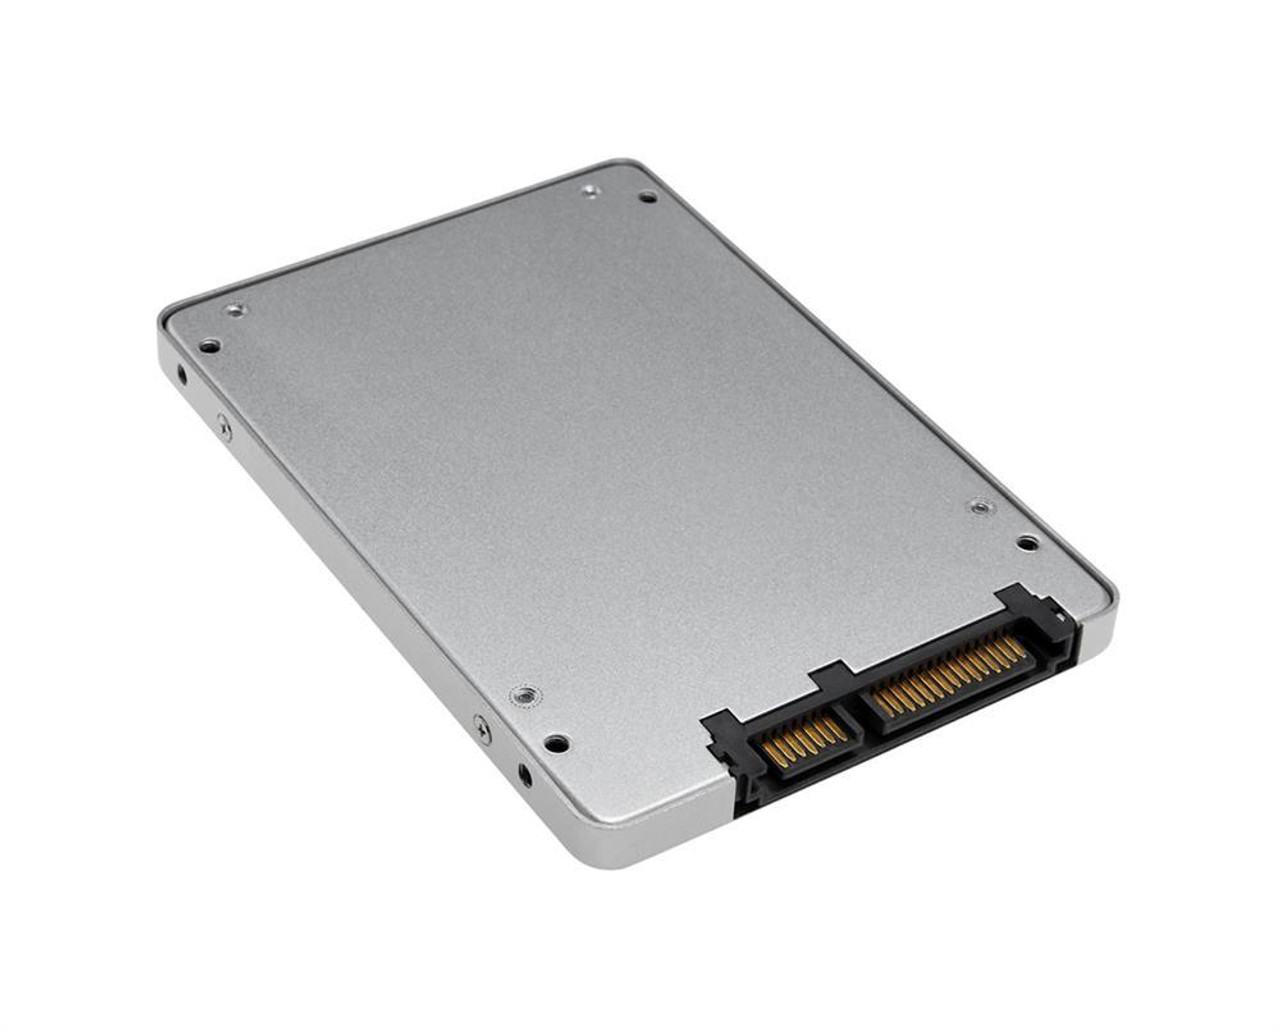 03B01-00131200 Asus S3 SSD 512GB 2.5-inch 7Mm X4131002